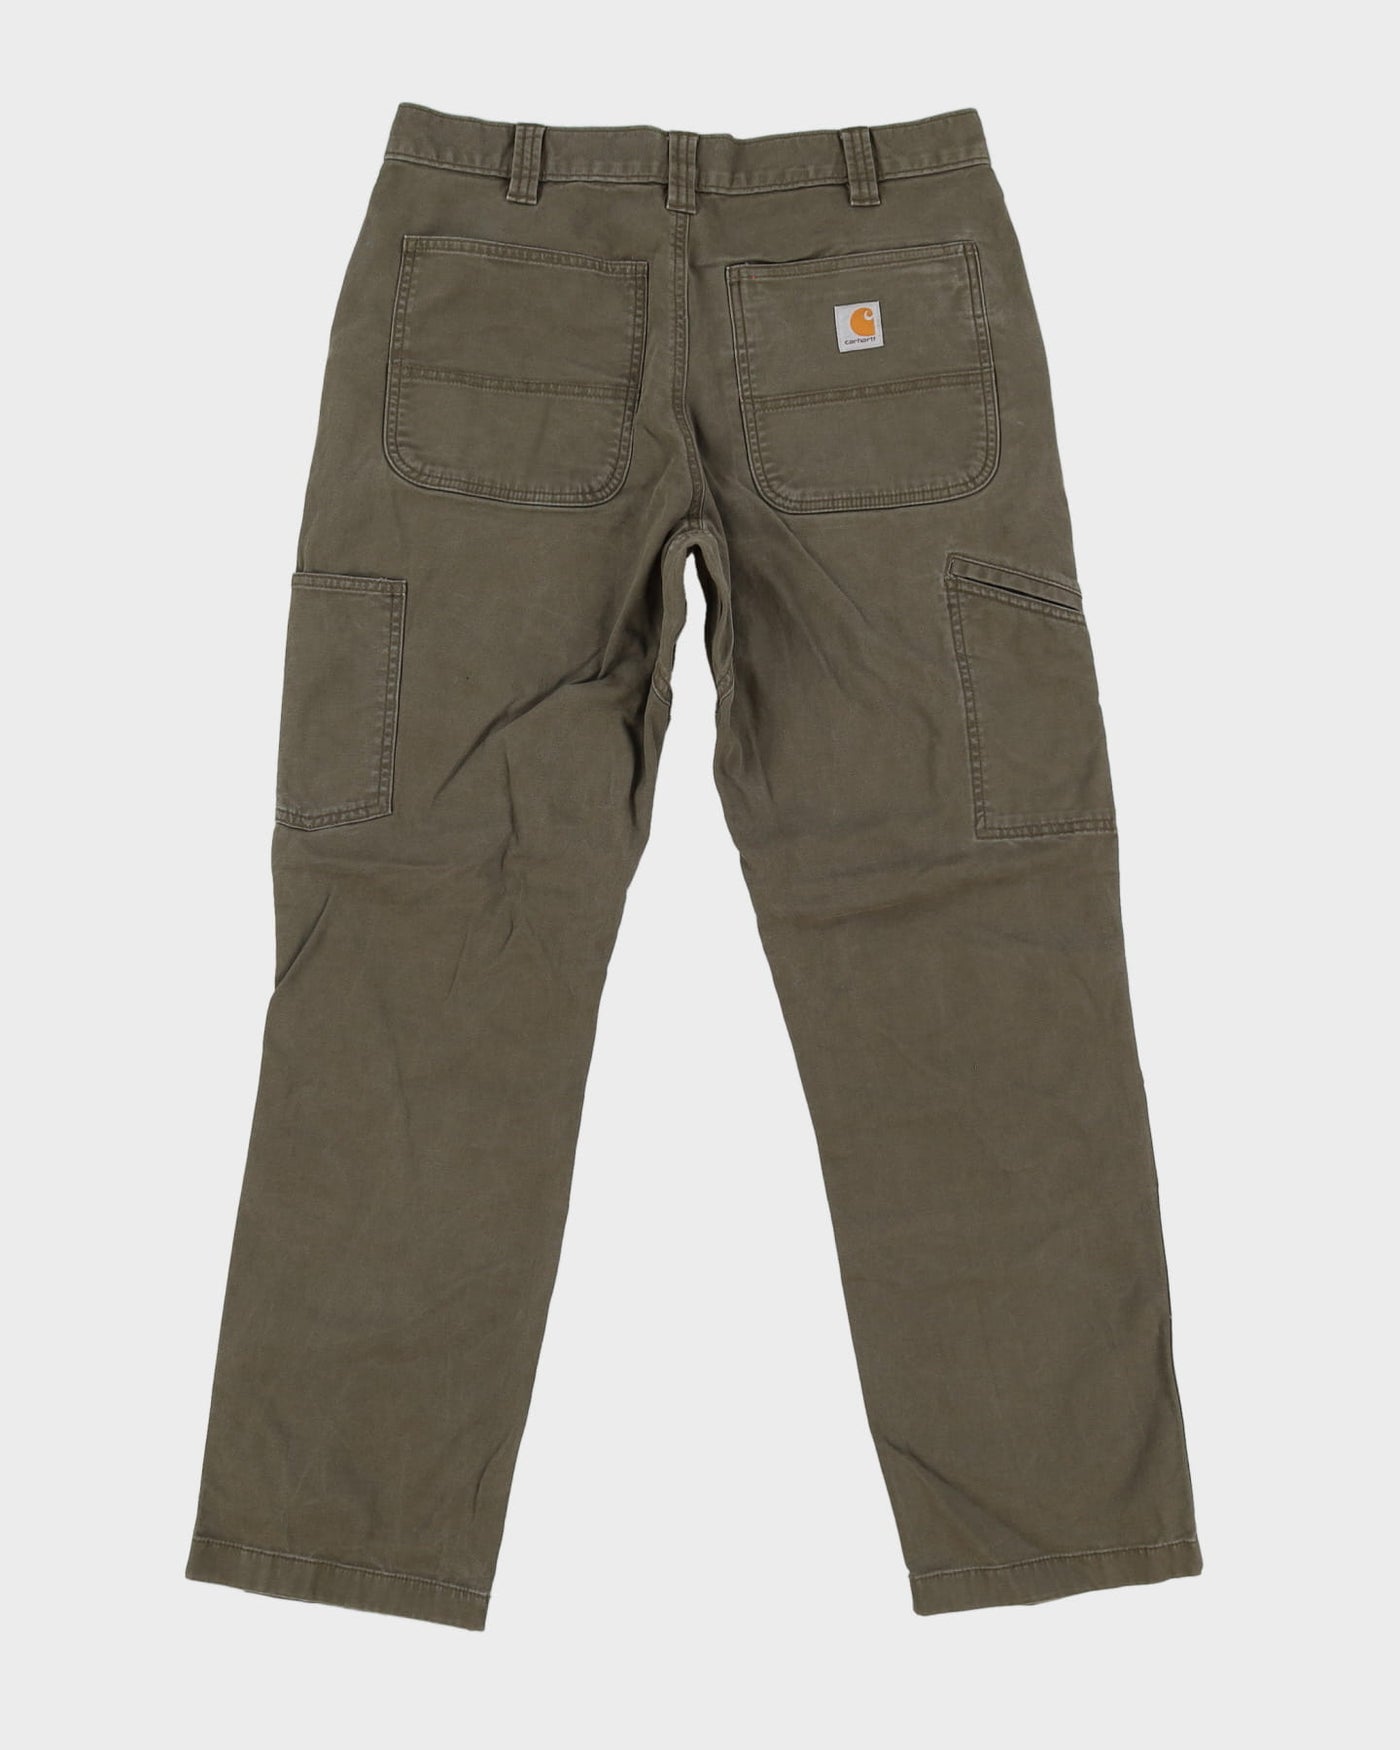 Vintage 90s Carhartt Green Double Knee Workwear Trousers / Jeans - W33 L30